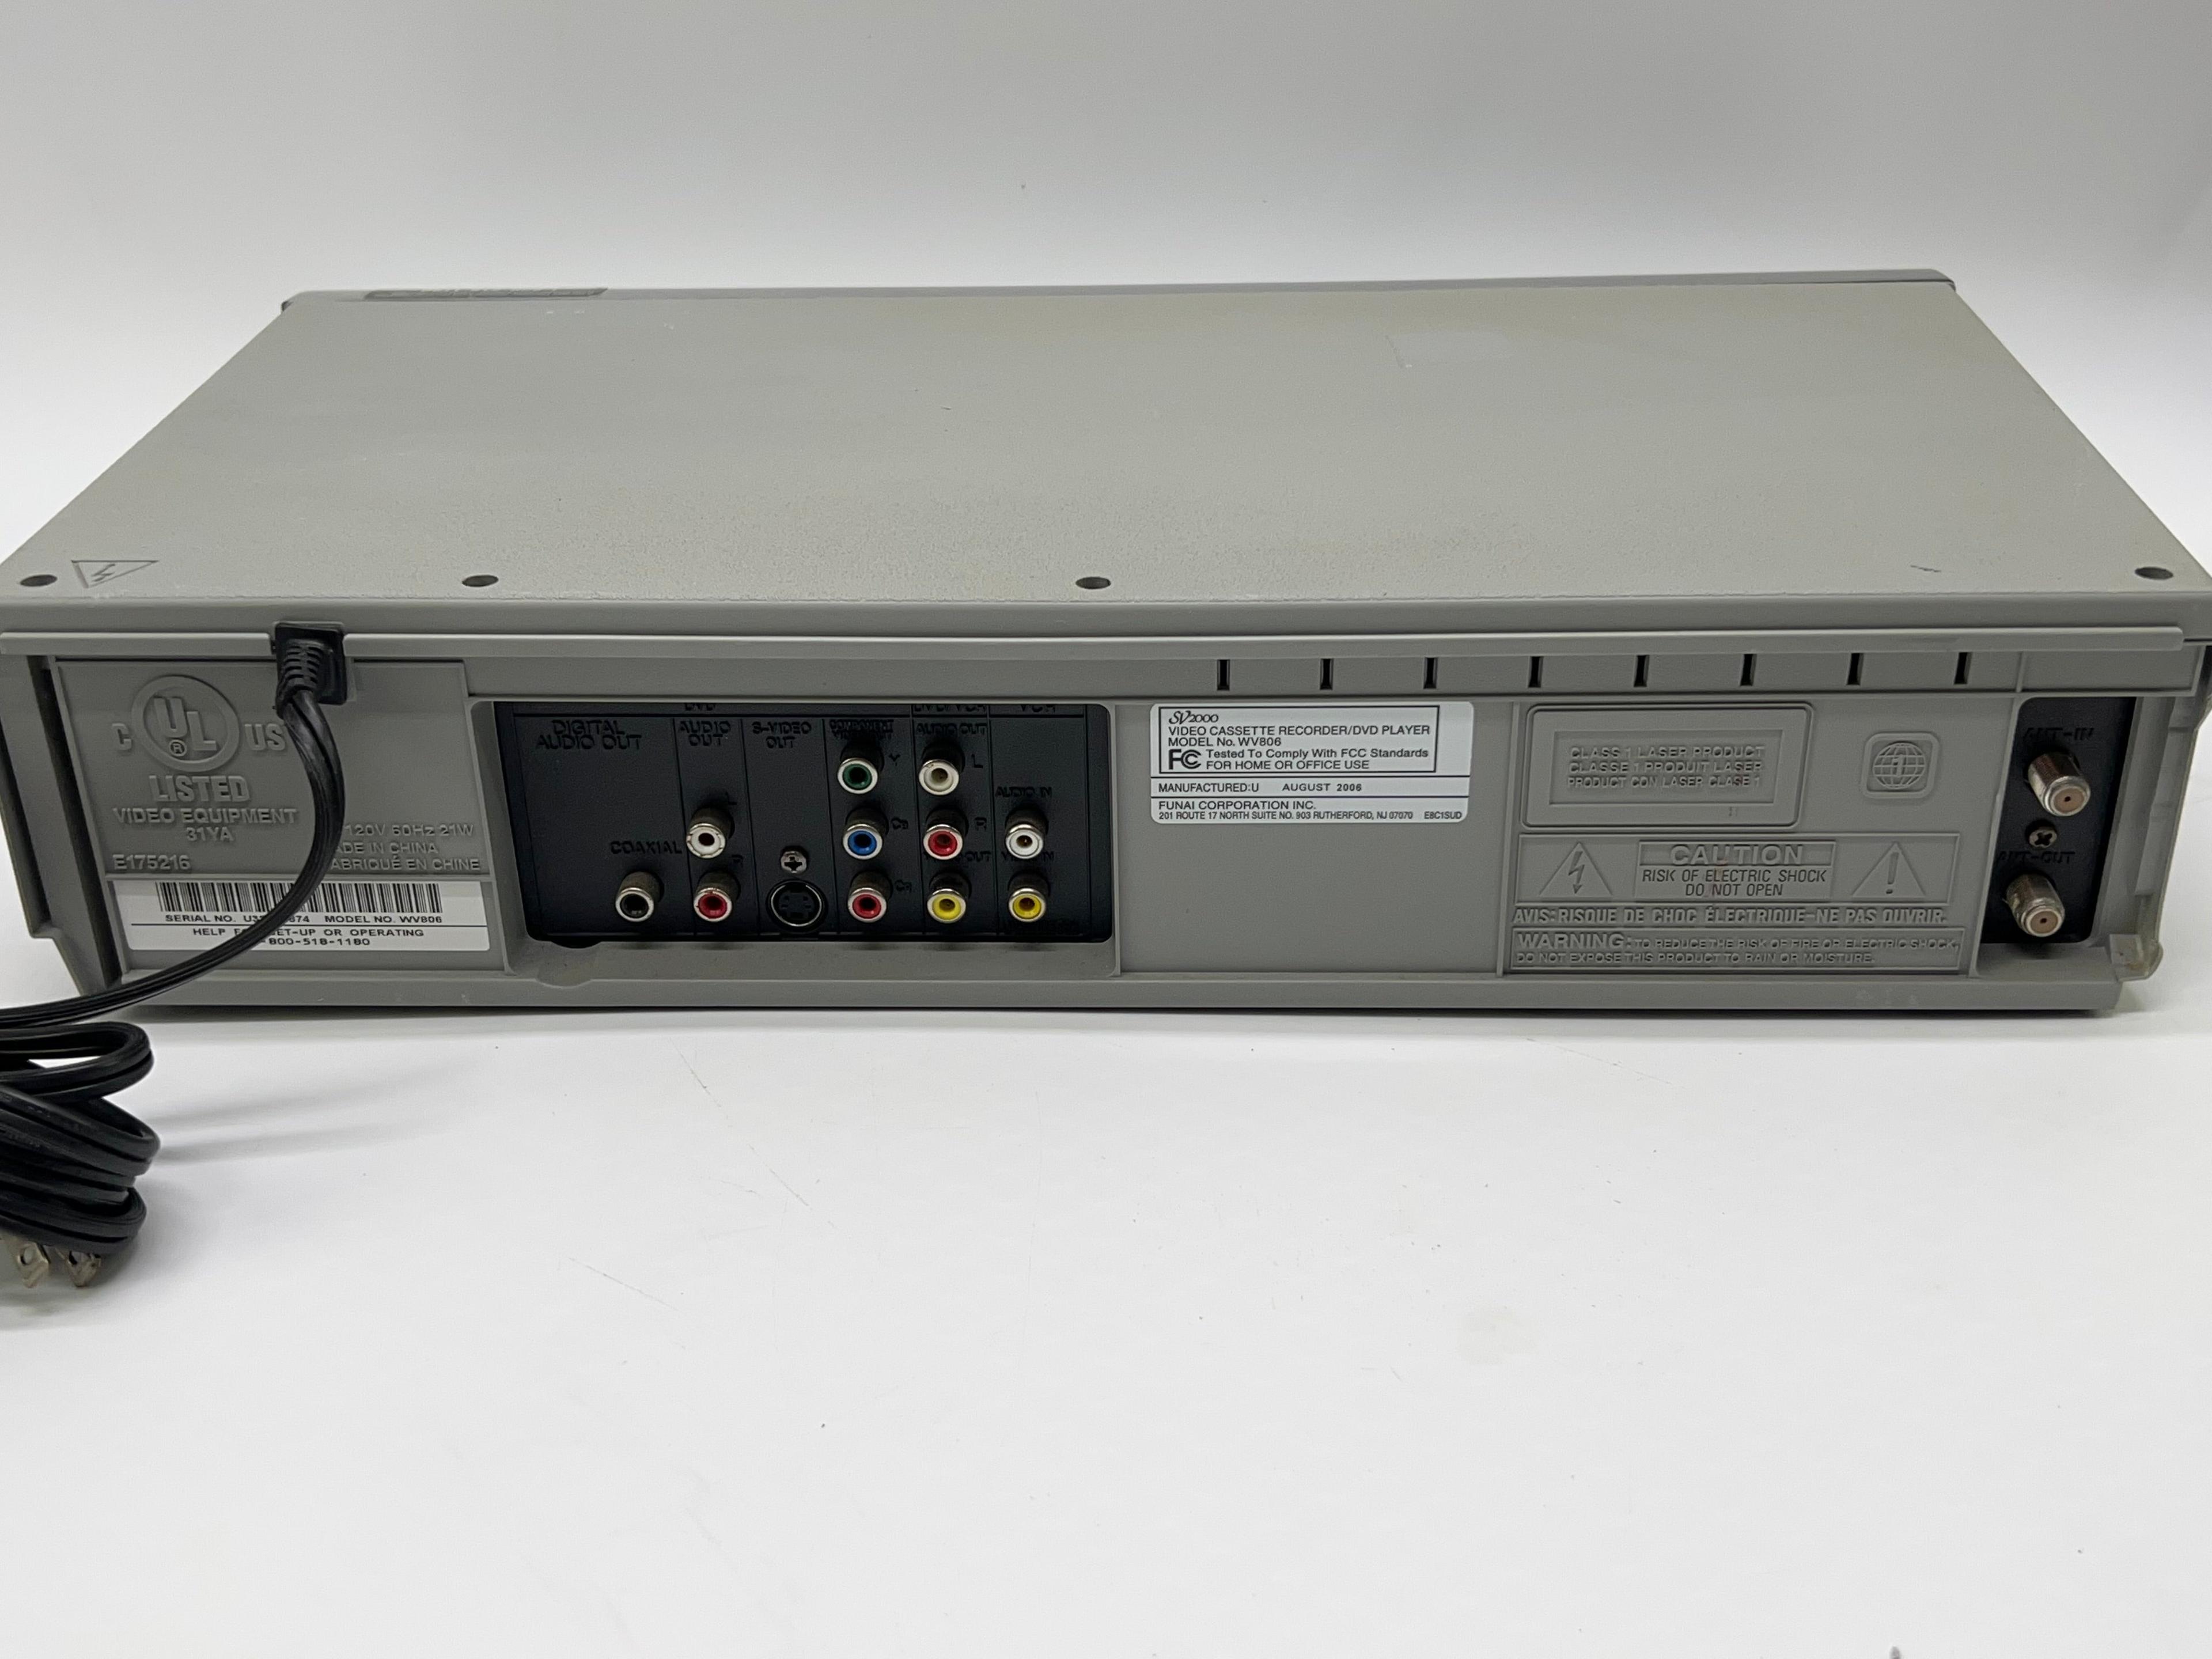 Alternate View 6 of SV2000 FUNAI WV806 DVD Player / VCR VHS Combo 4-Head Recorder No